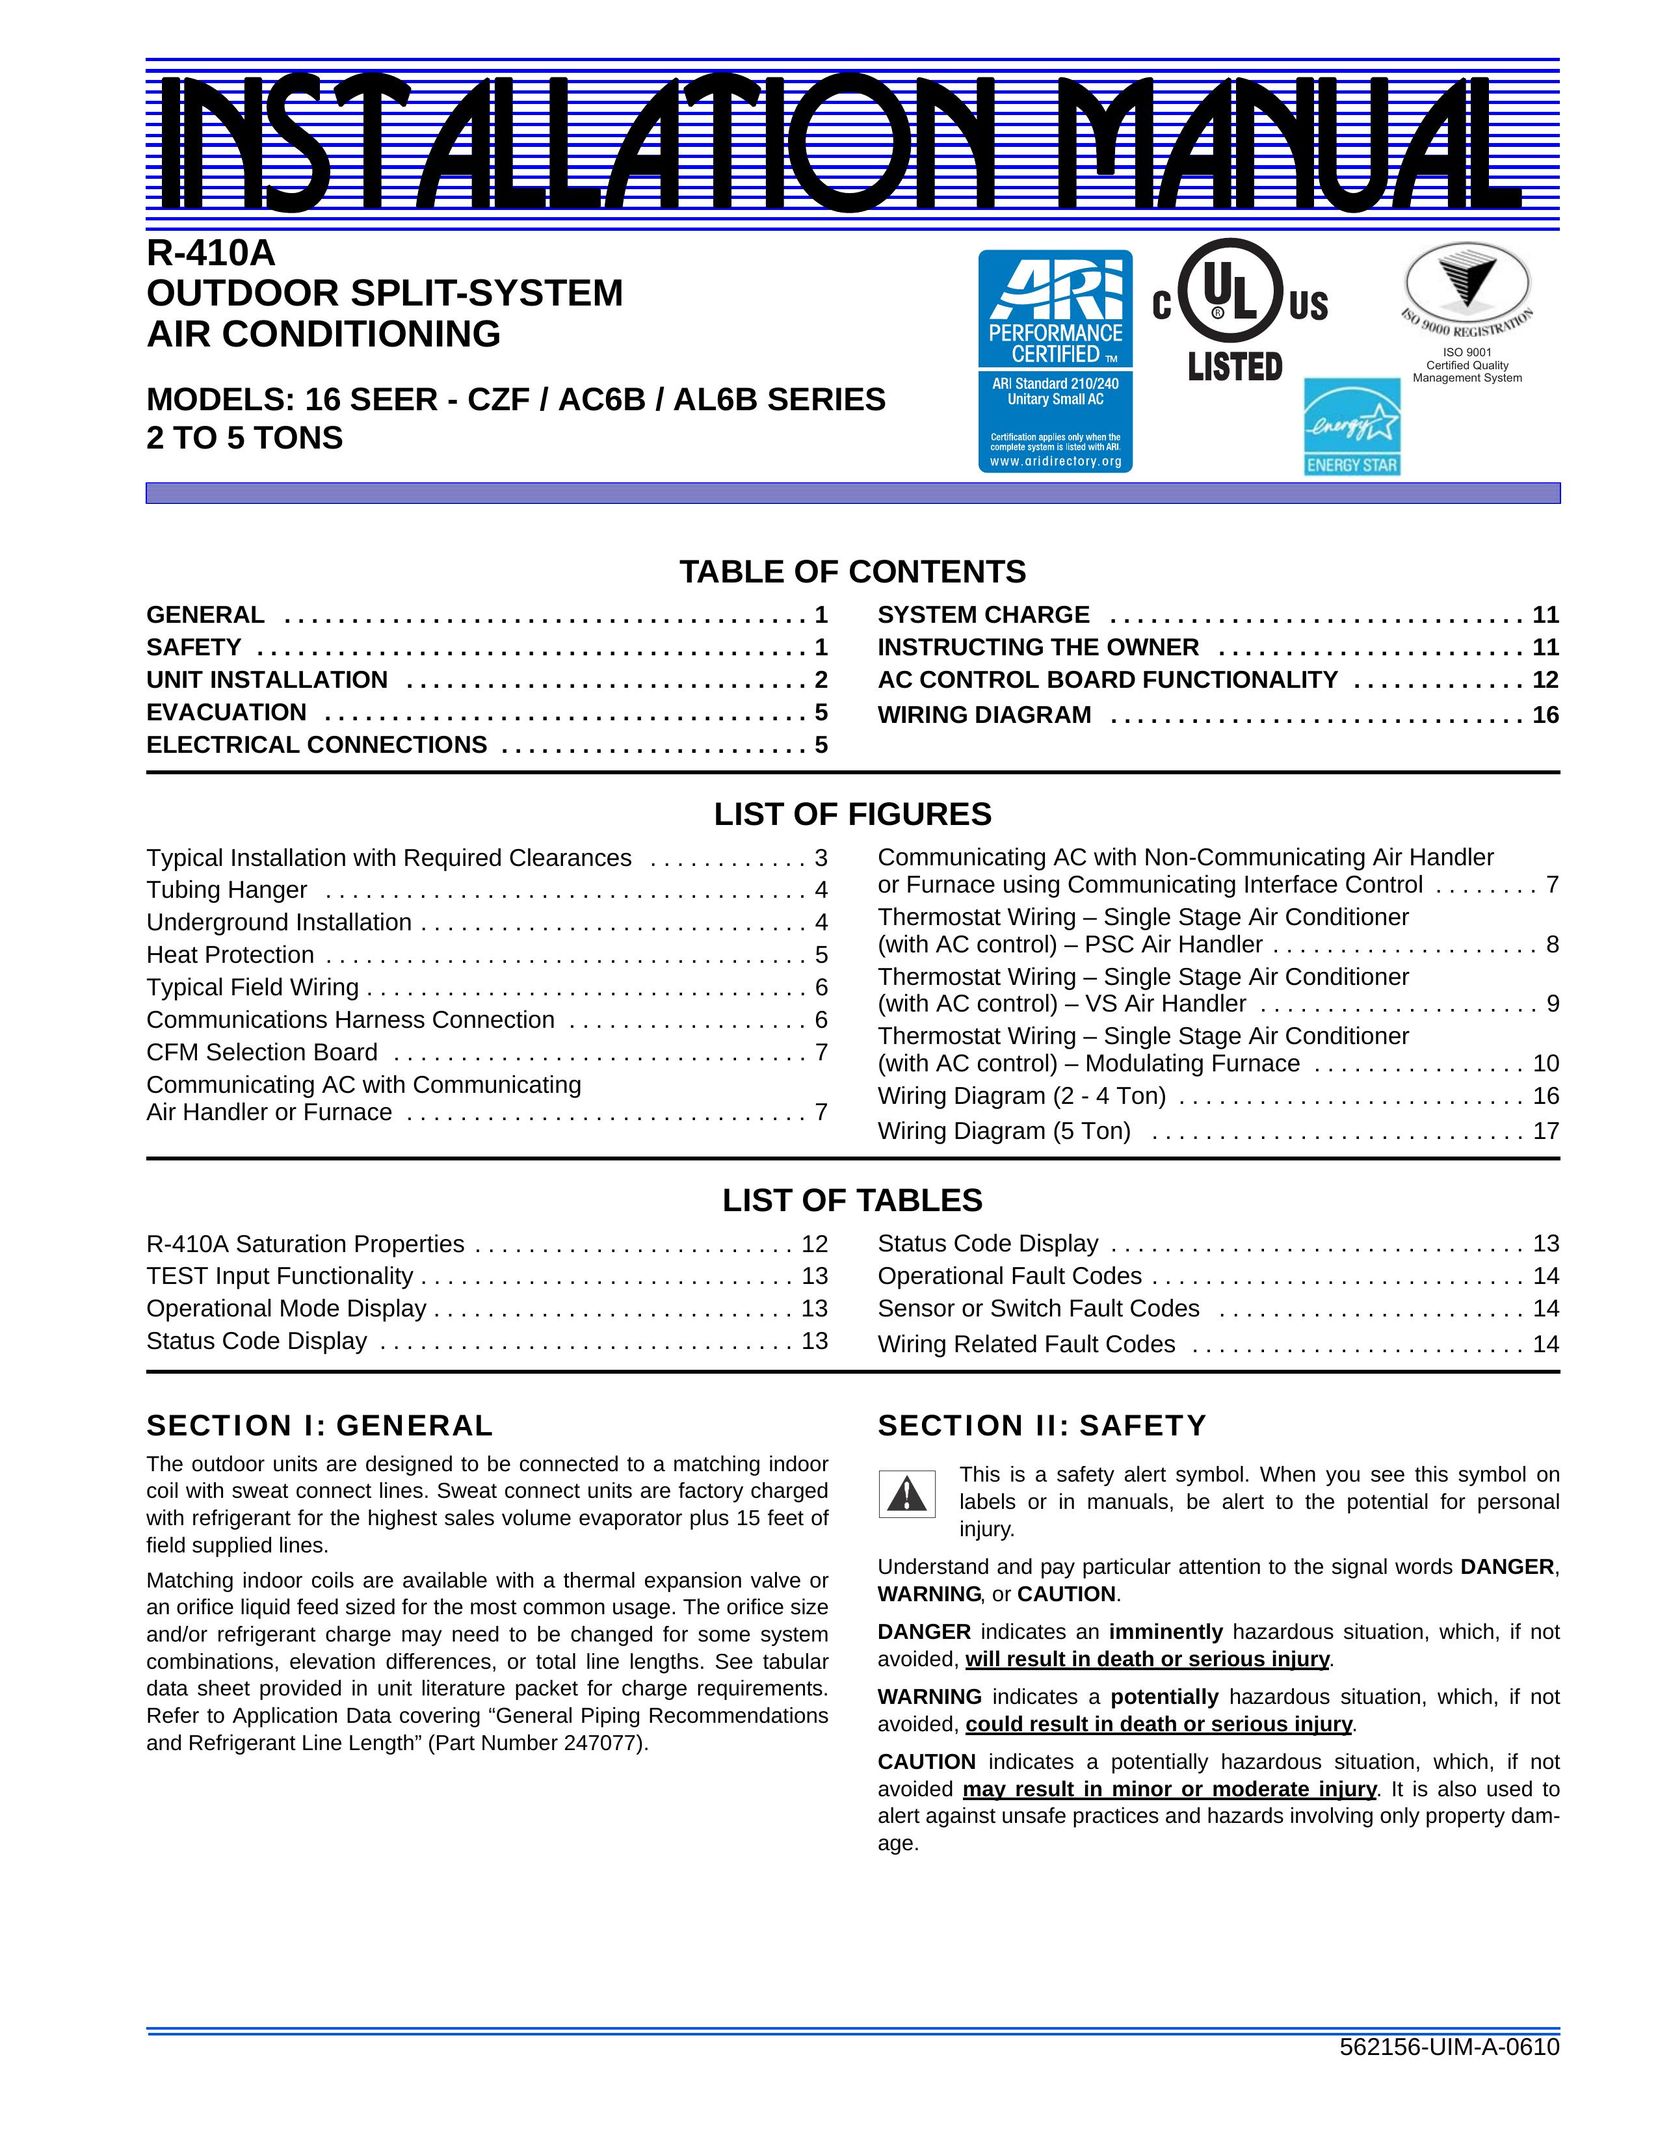 Johnson Controls AL6B SERIES Air Conditioner User Manual